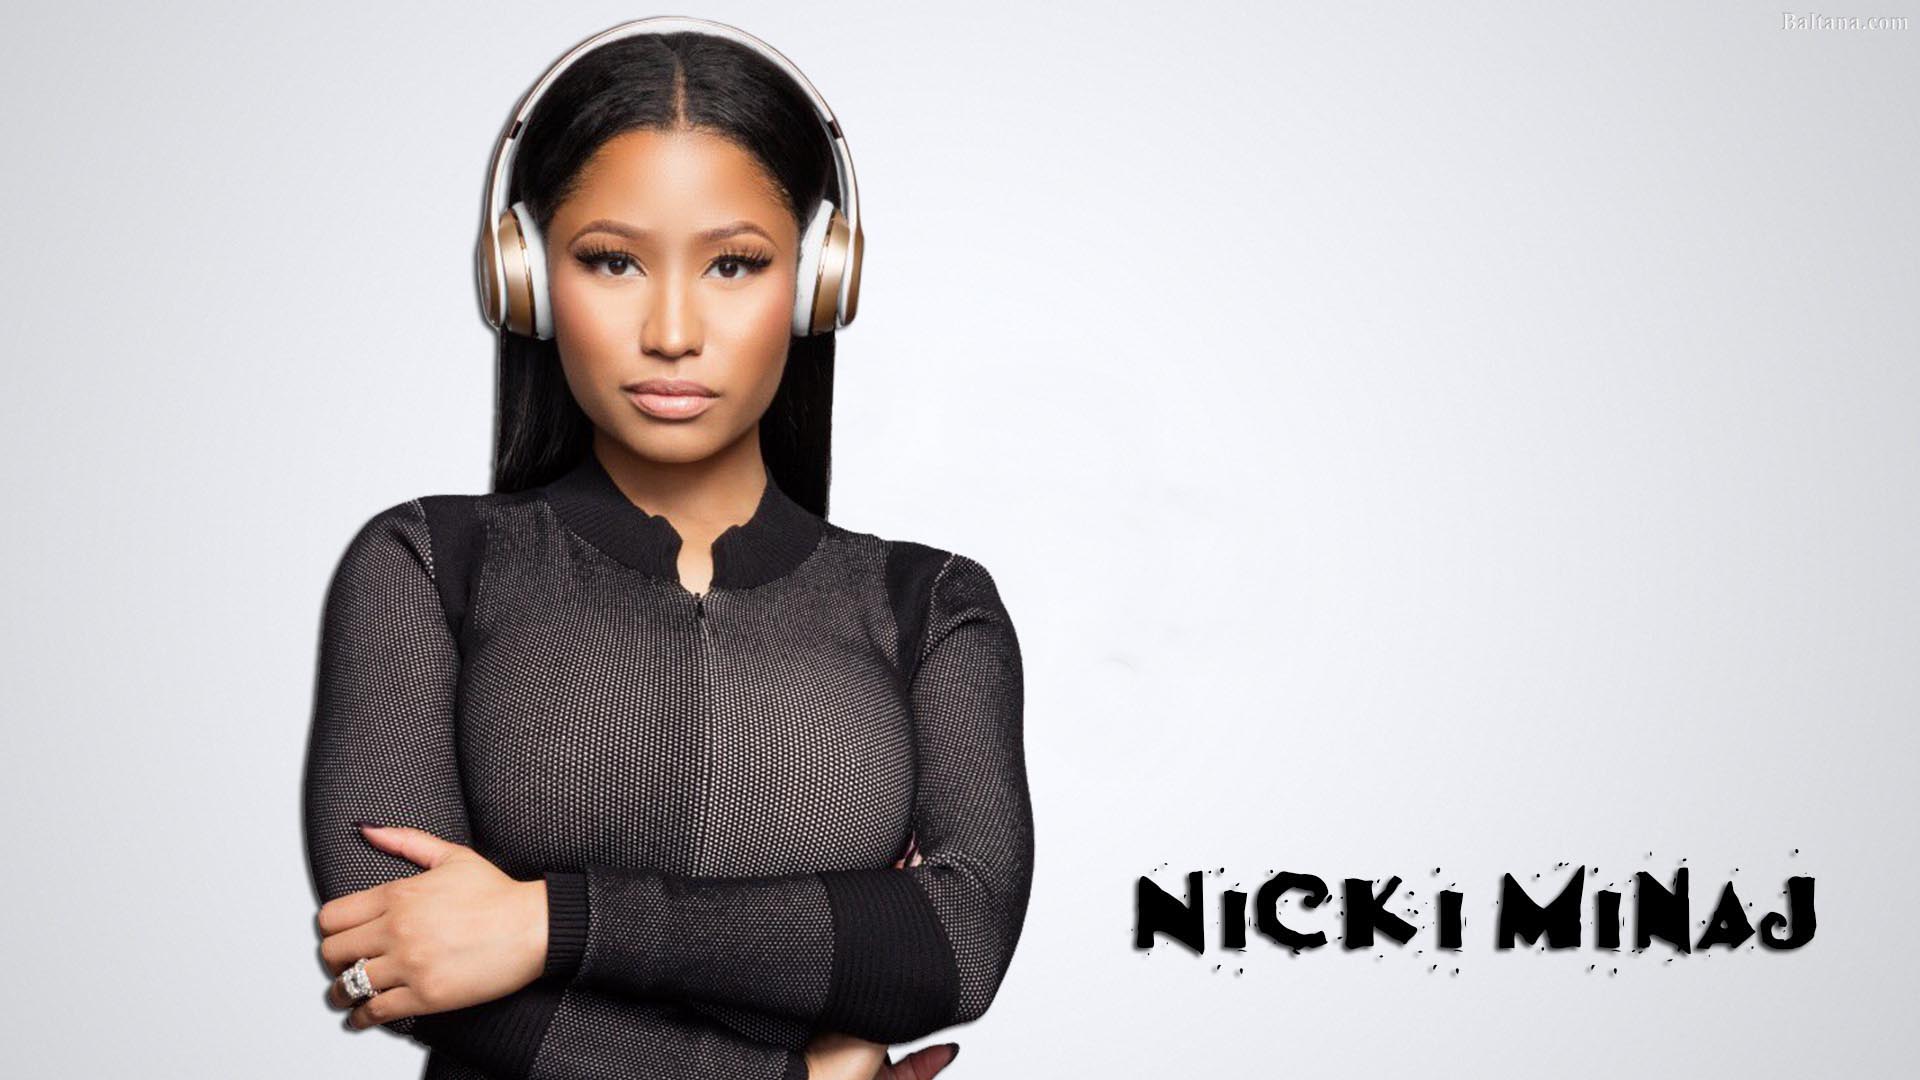 Nicki Minaj With Headphones Is Wearing Black Dress 2K Girls